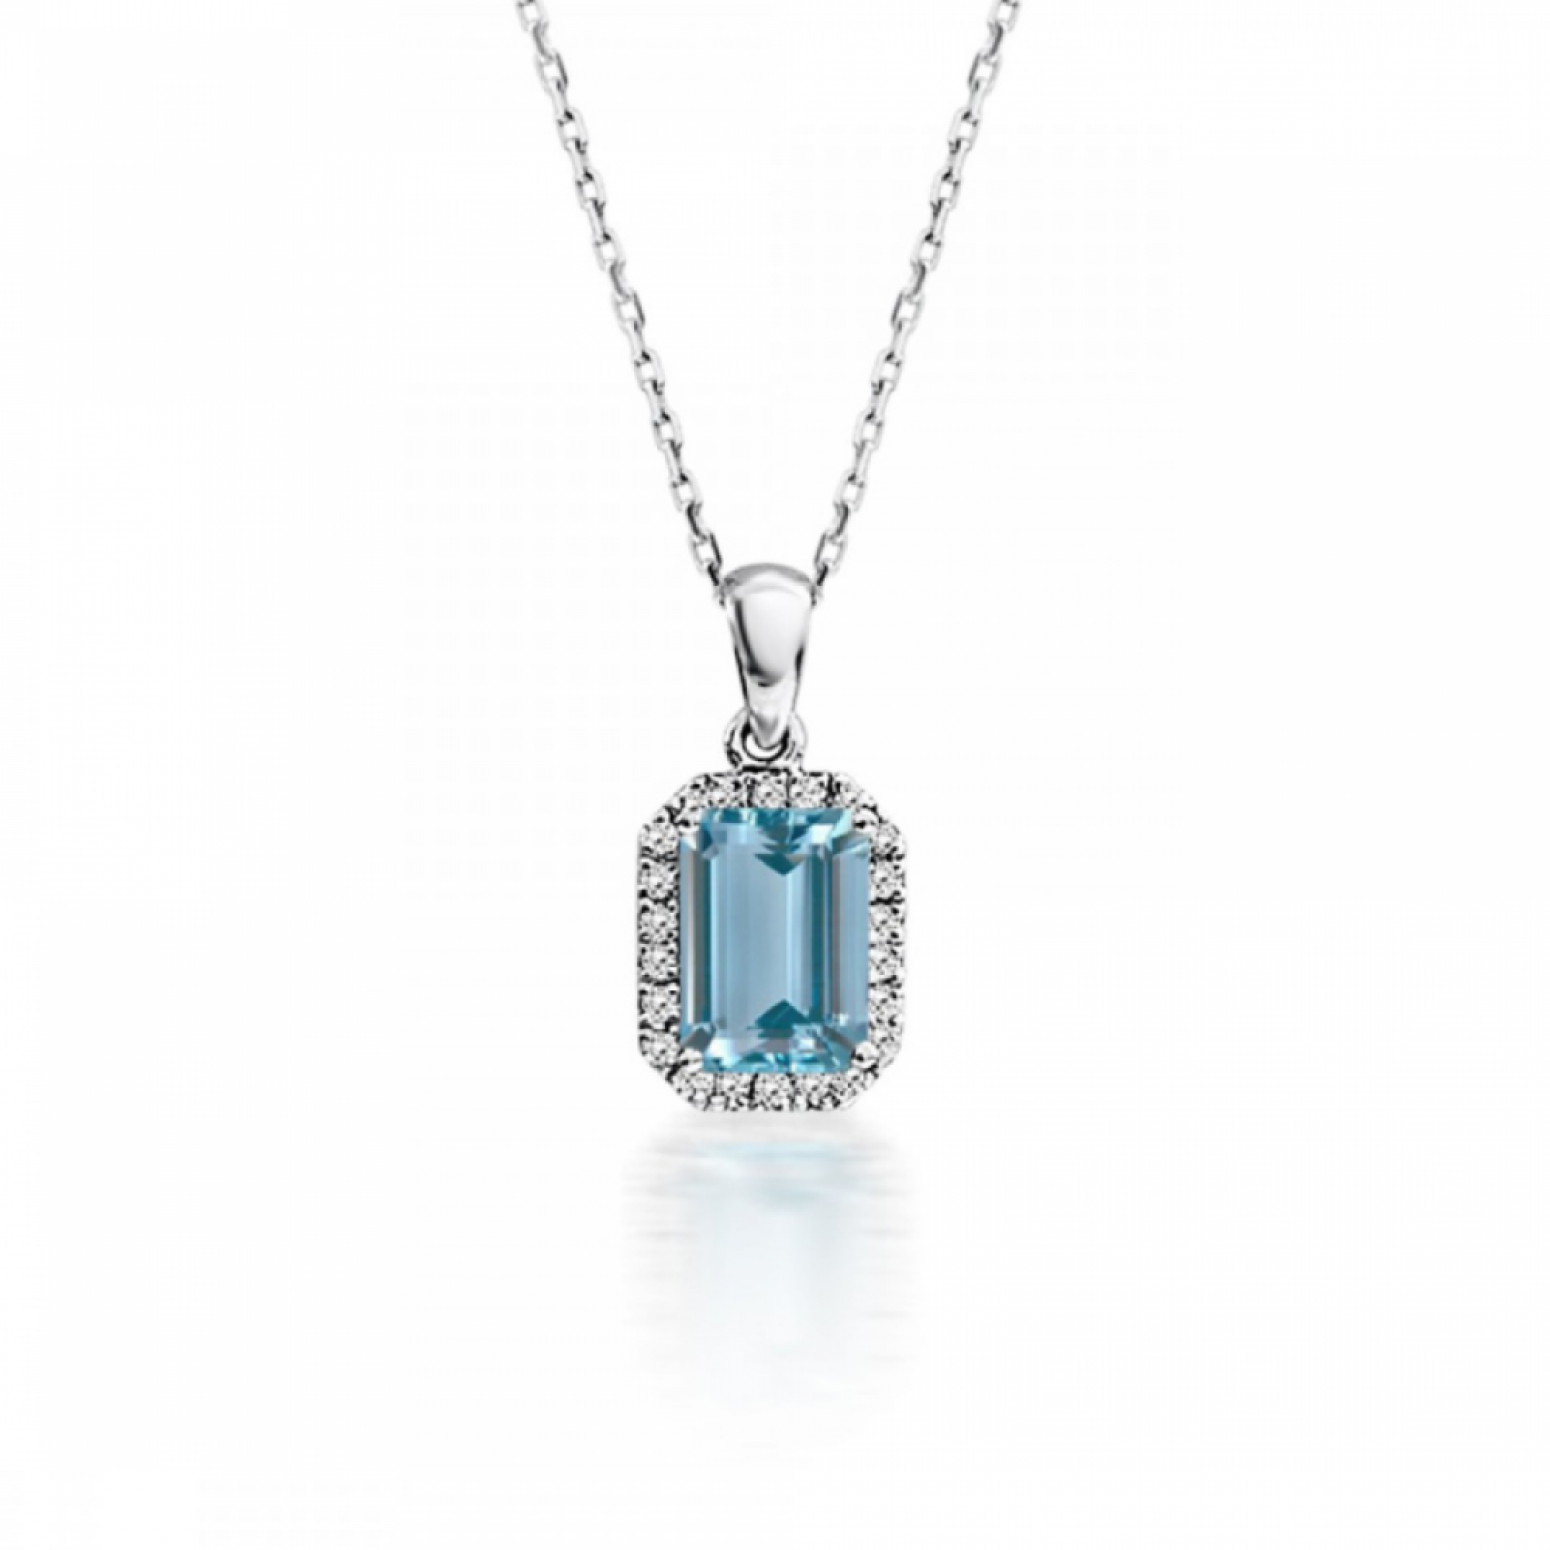 Multistone necklace 18K white gold with aquamarine 0.81ct and diamonds 0.09ct, VS1, H ko5192 NECKLACES Κοσμηματα - chrilia.gr